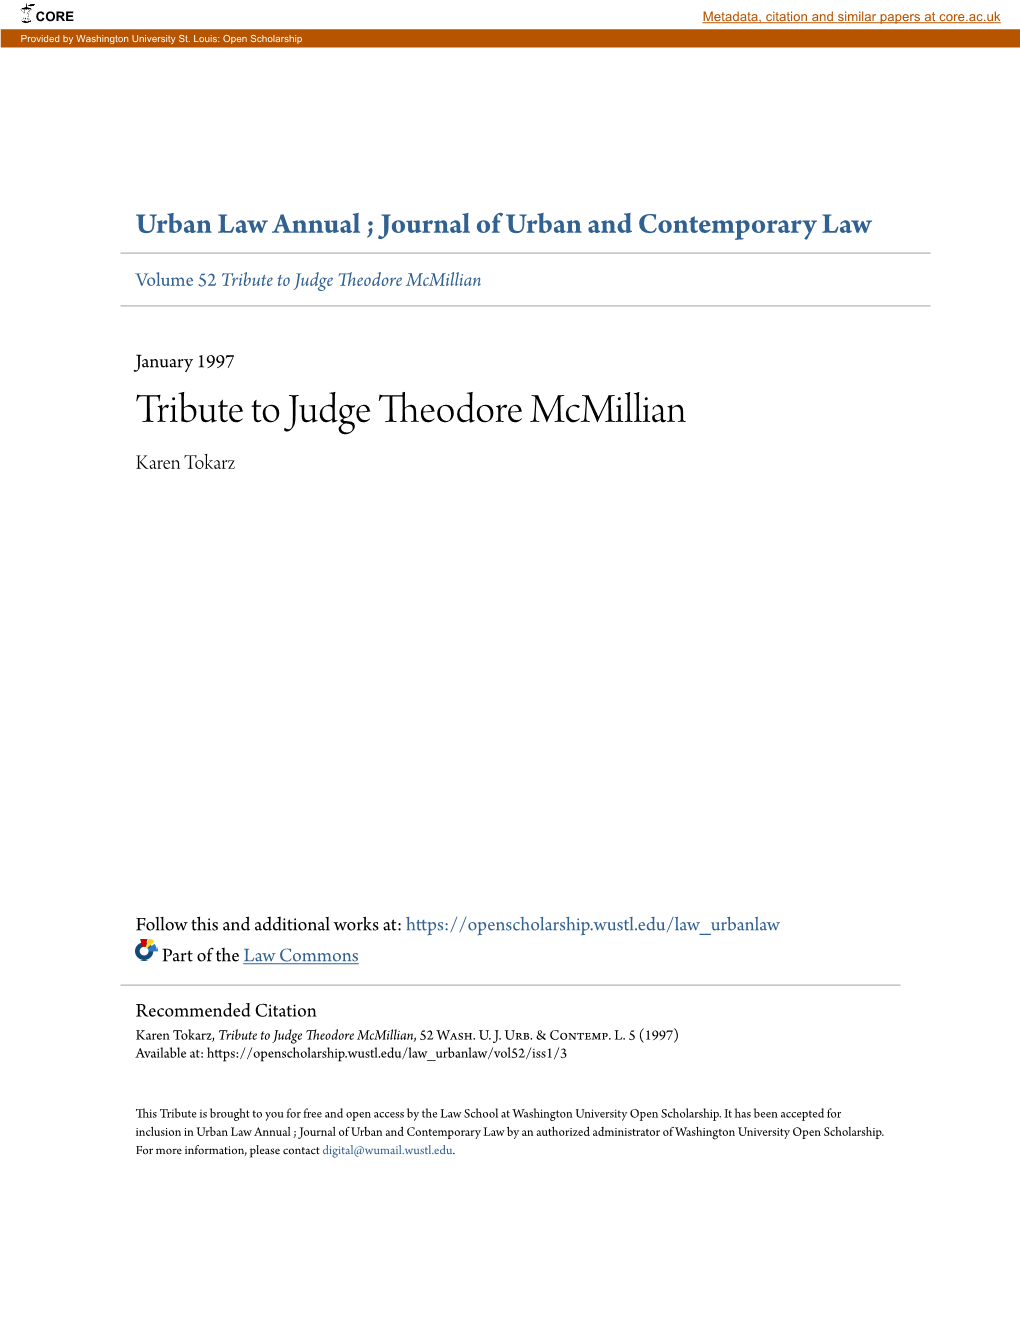 Tribute to Judge Theodore Mcmillian